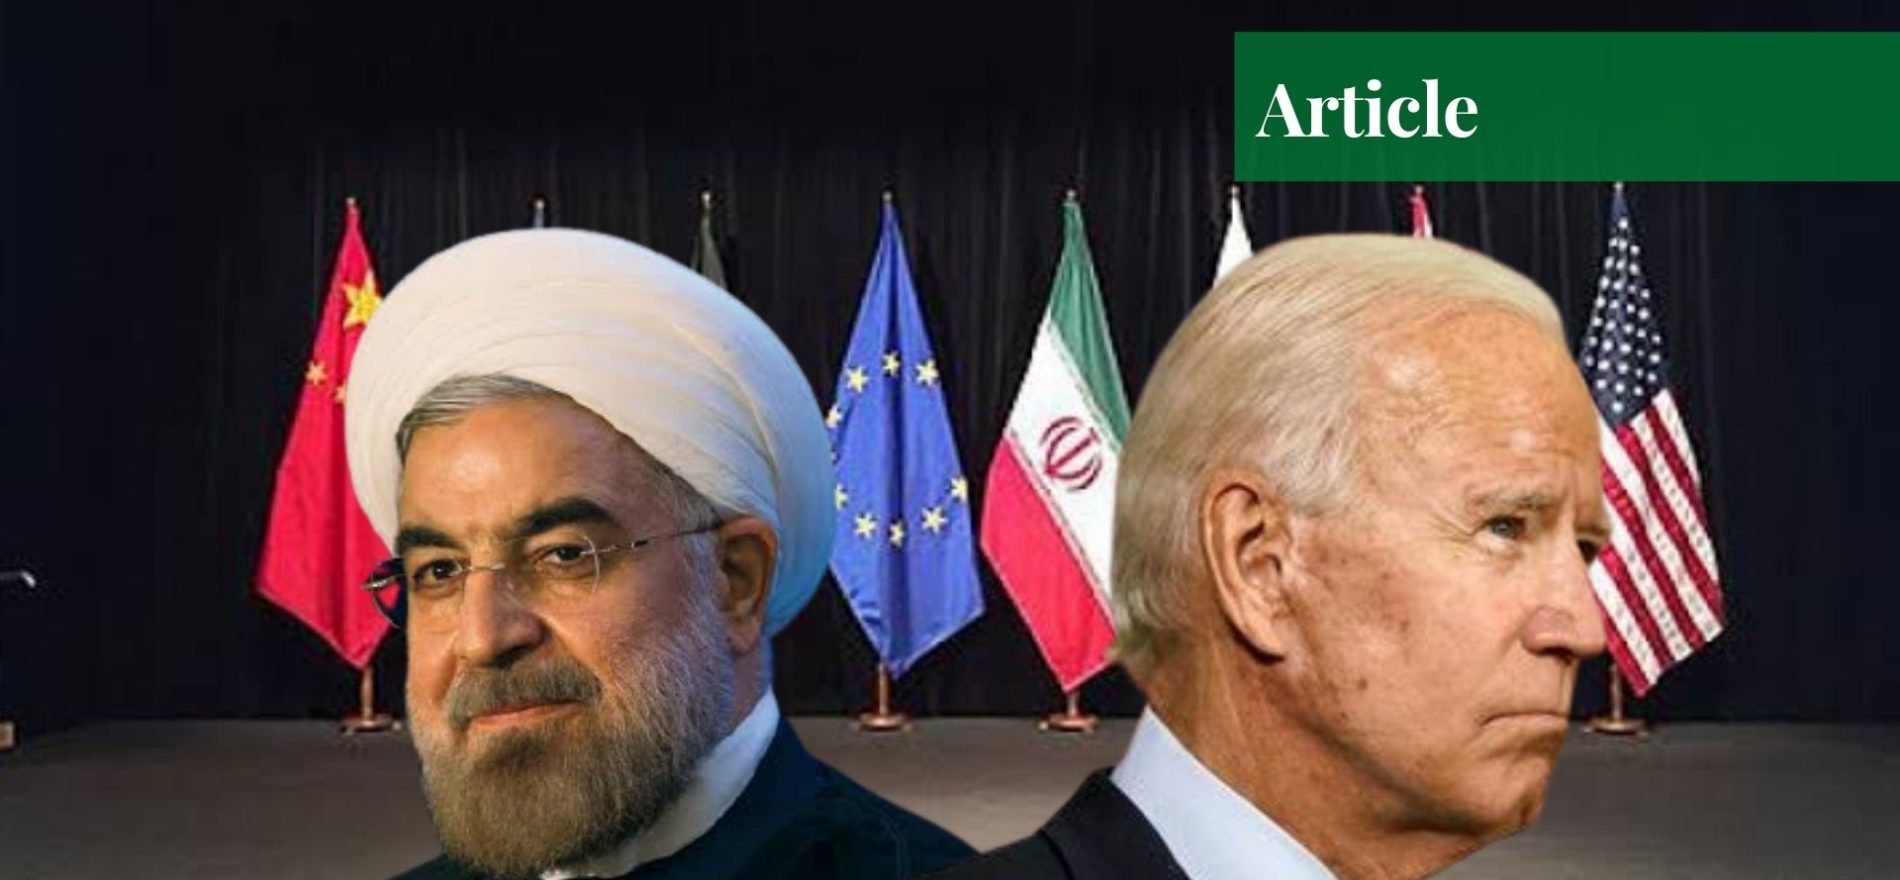 Iranian Nuclear Deal